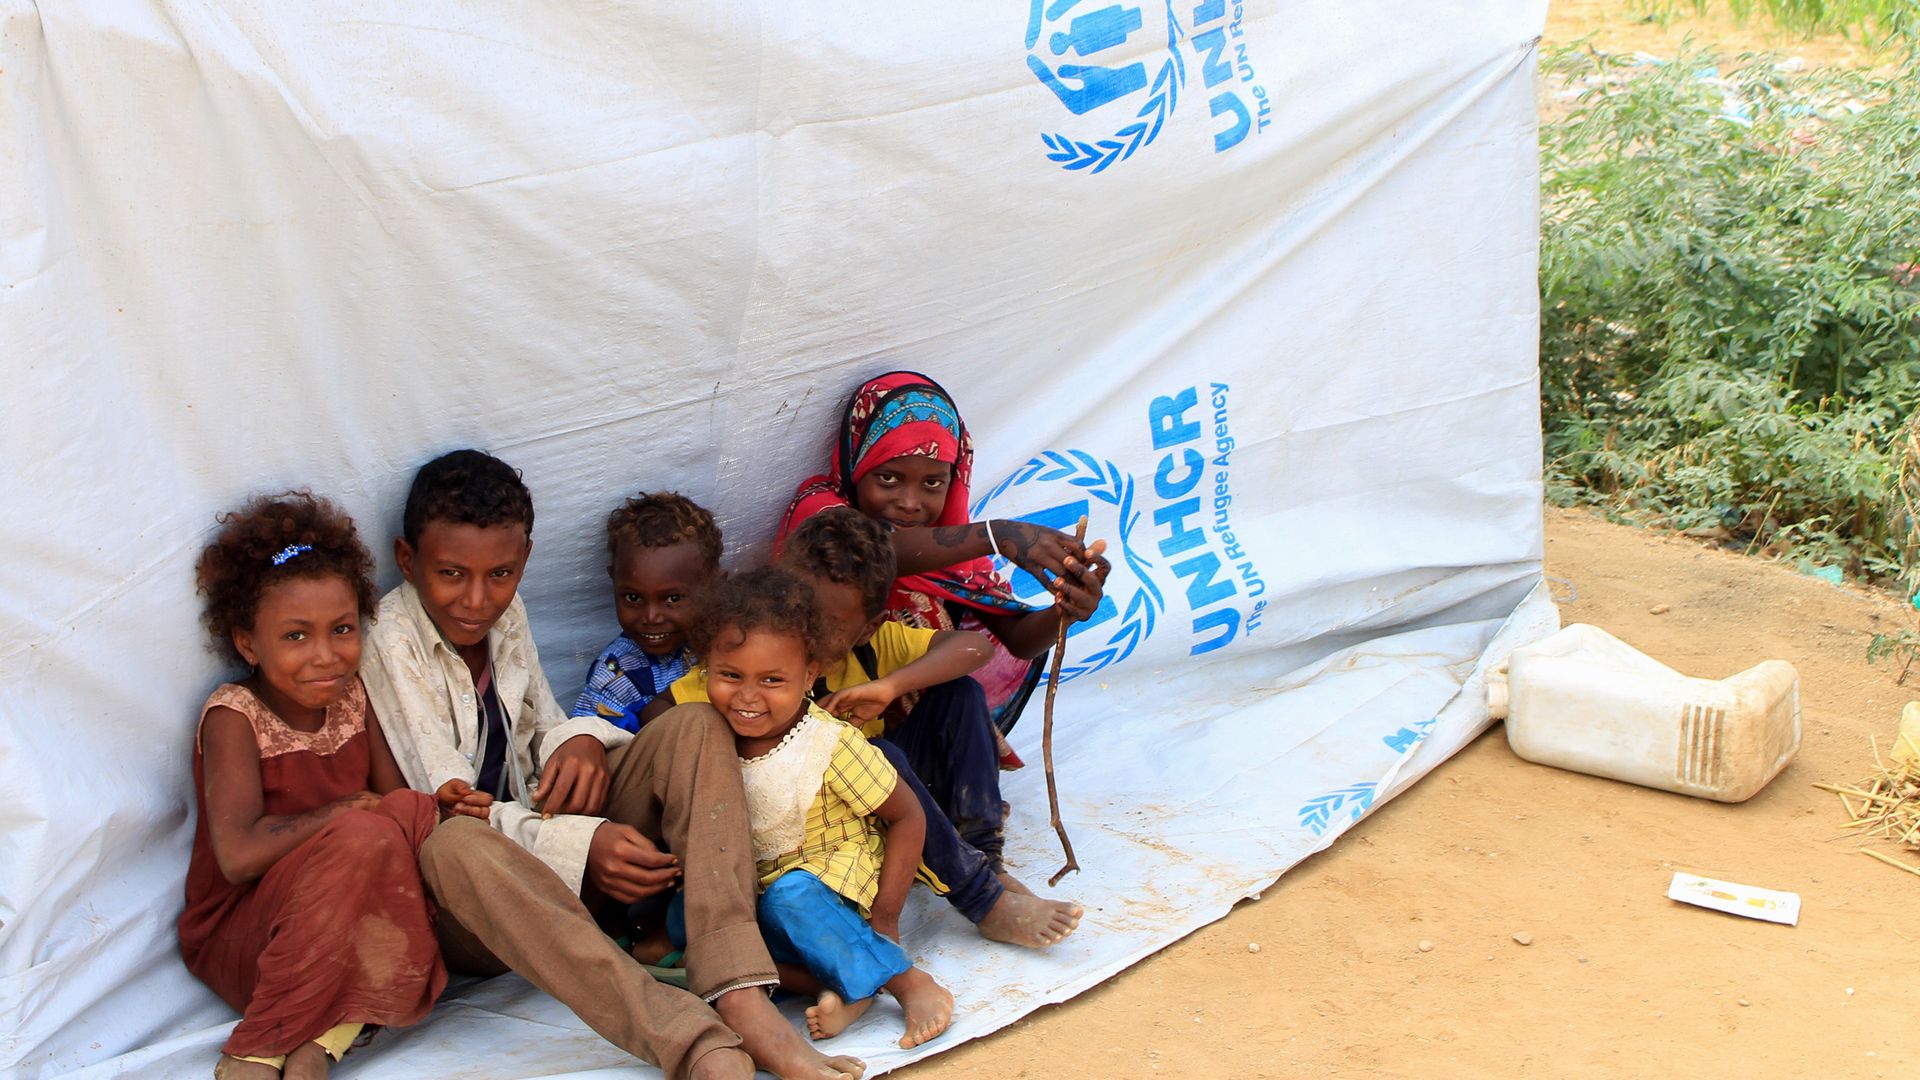 displaced Yemeni children sitting on a tarp